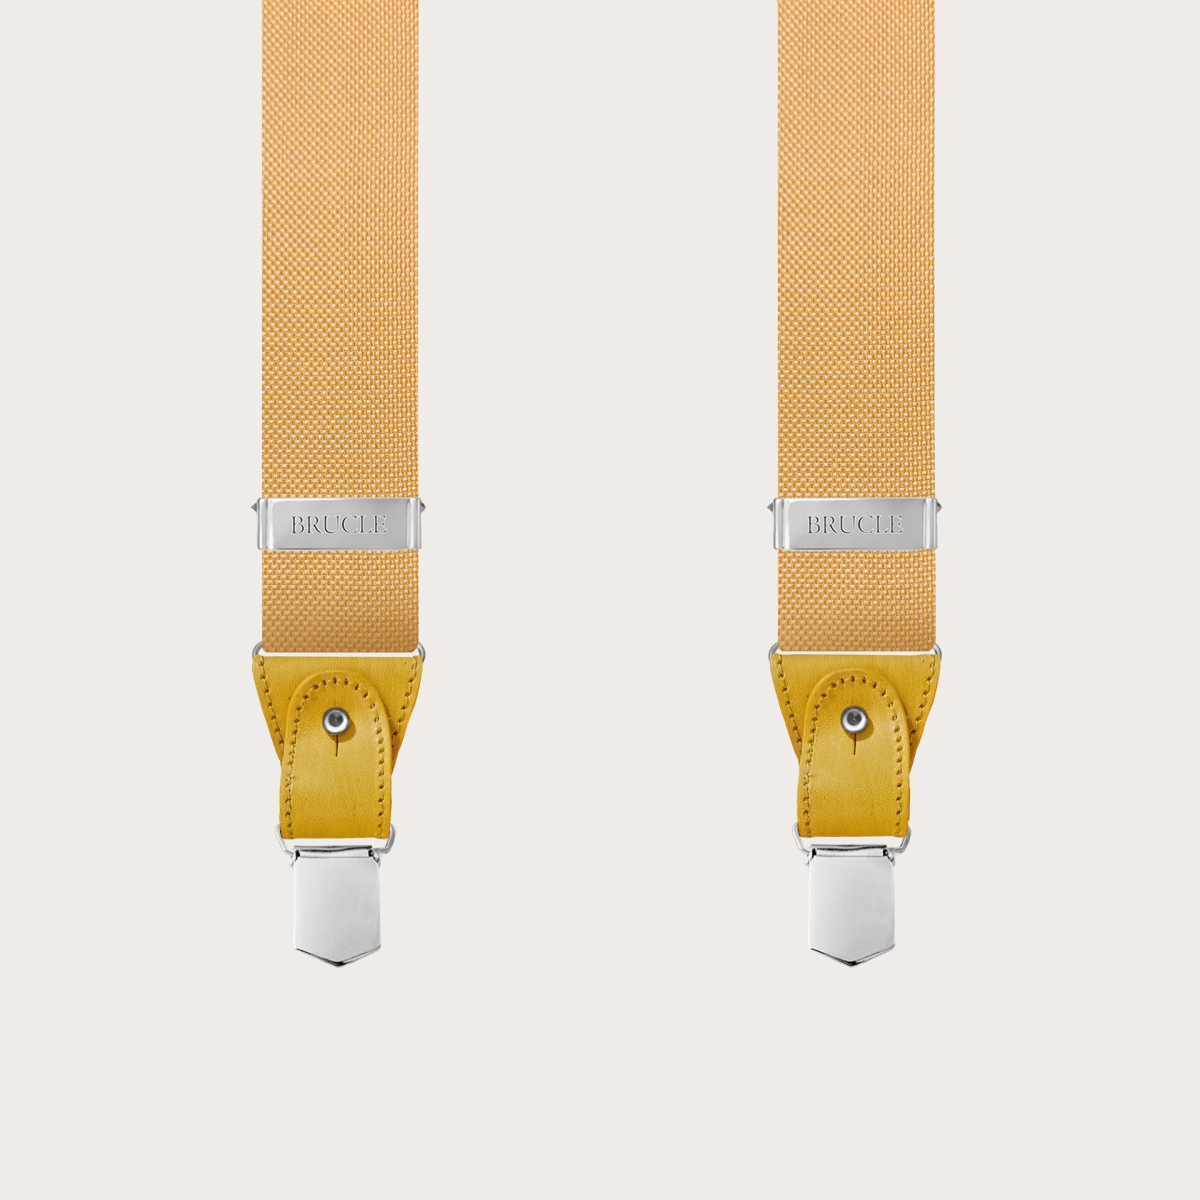 BRUCLE Formal Y-shape tubular silk suspenders, yellow